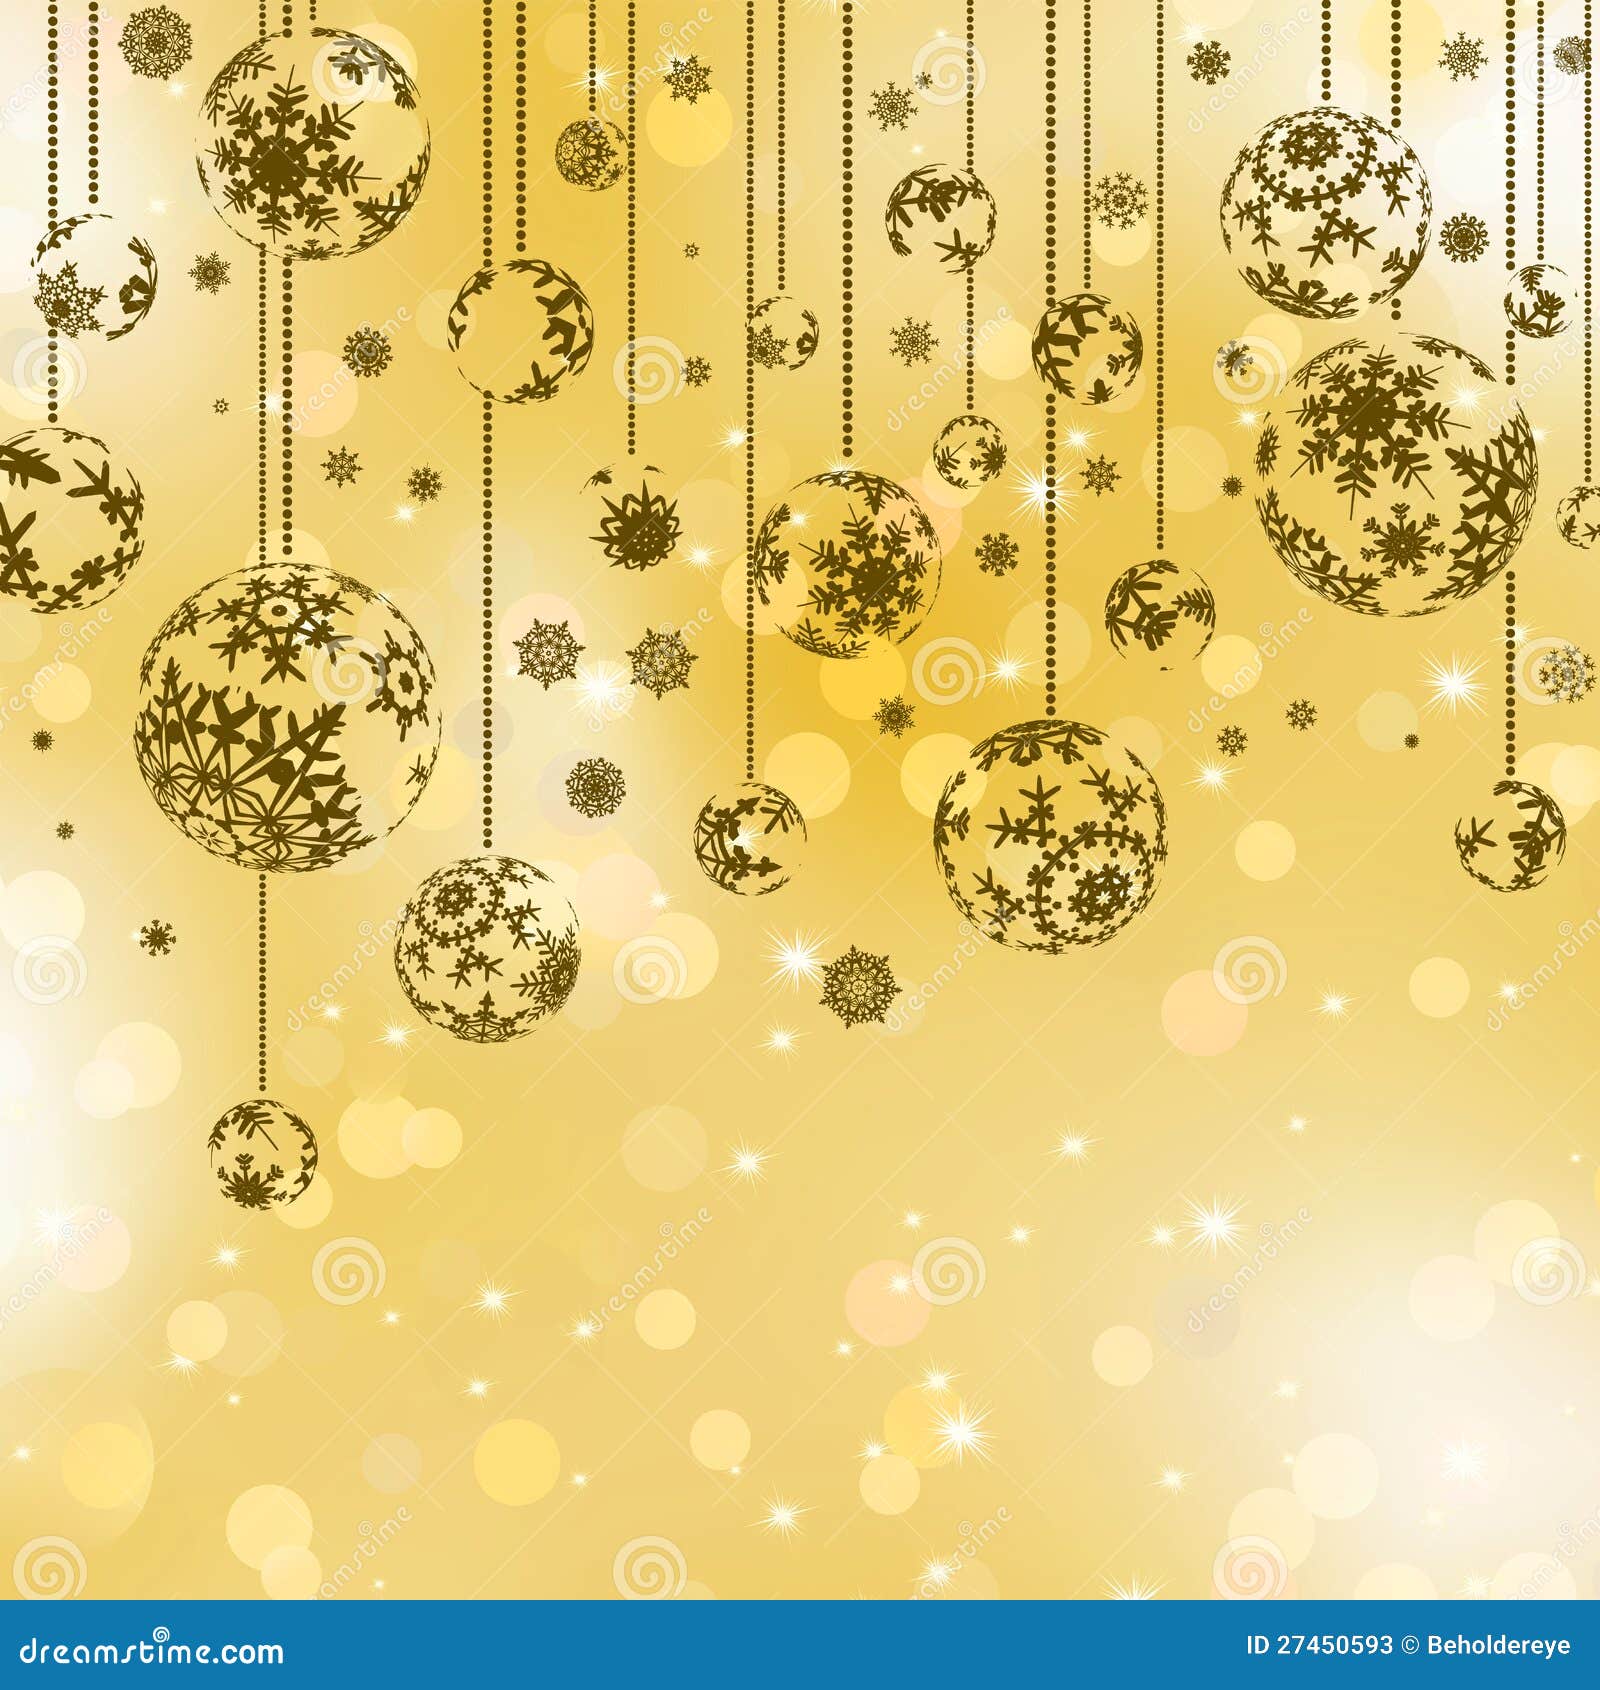 Christmas And New Year Border Design. EPS 8 Stock Photos - Image: 27450593